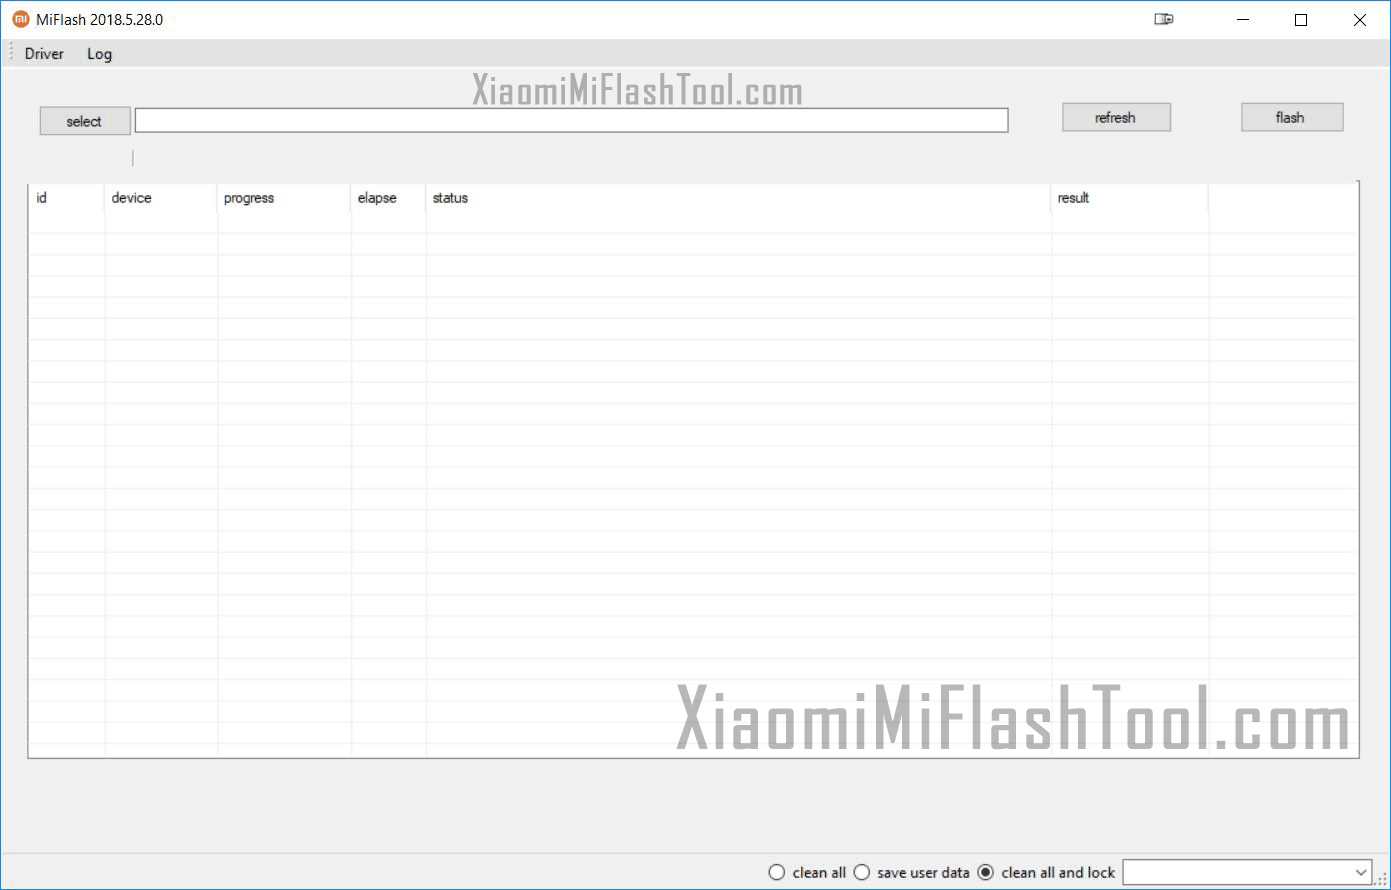 MiFlash 2018.5.28.0 - Xiaomi Mi Flash Tool 20180528